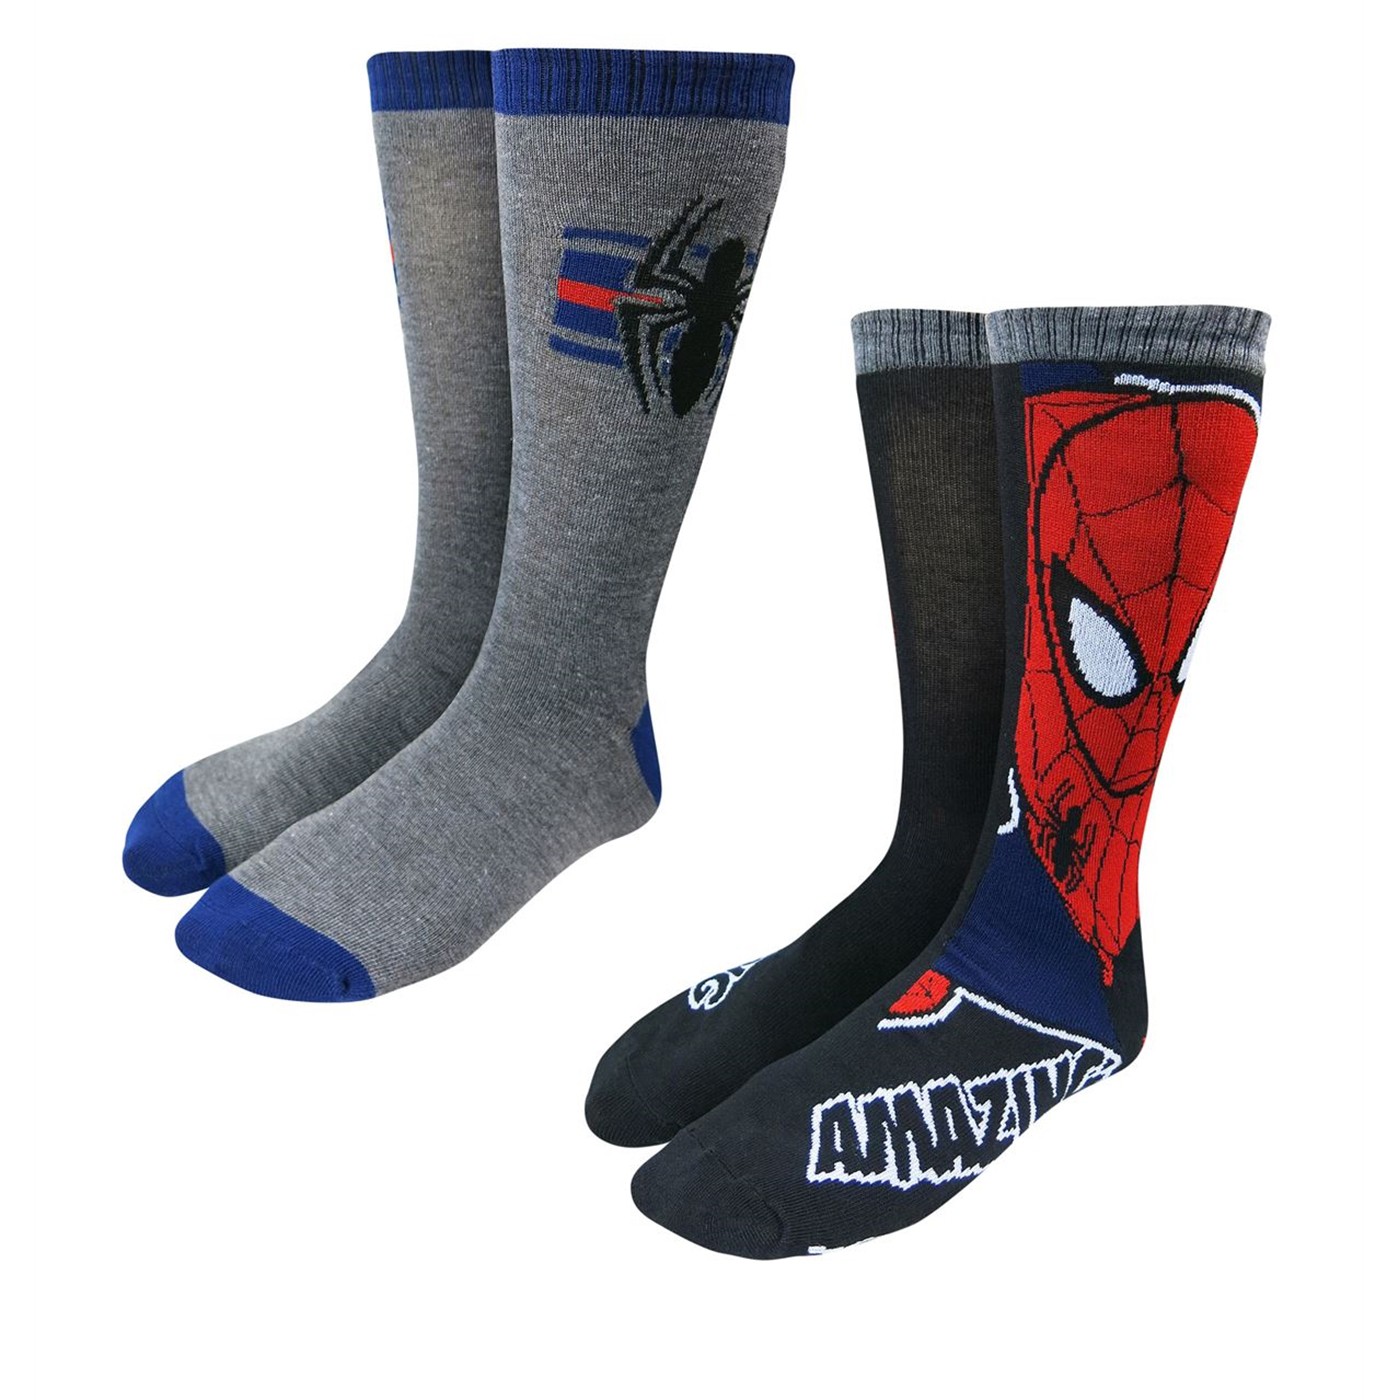 Spiderman Image and Symbols Sock 2 Pack